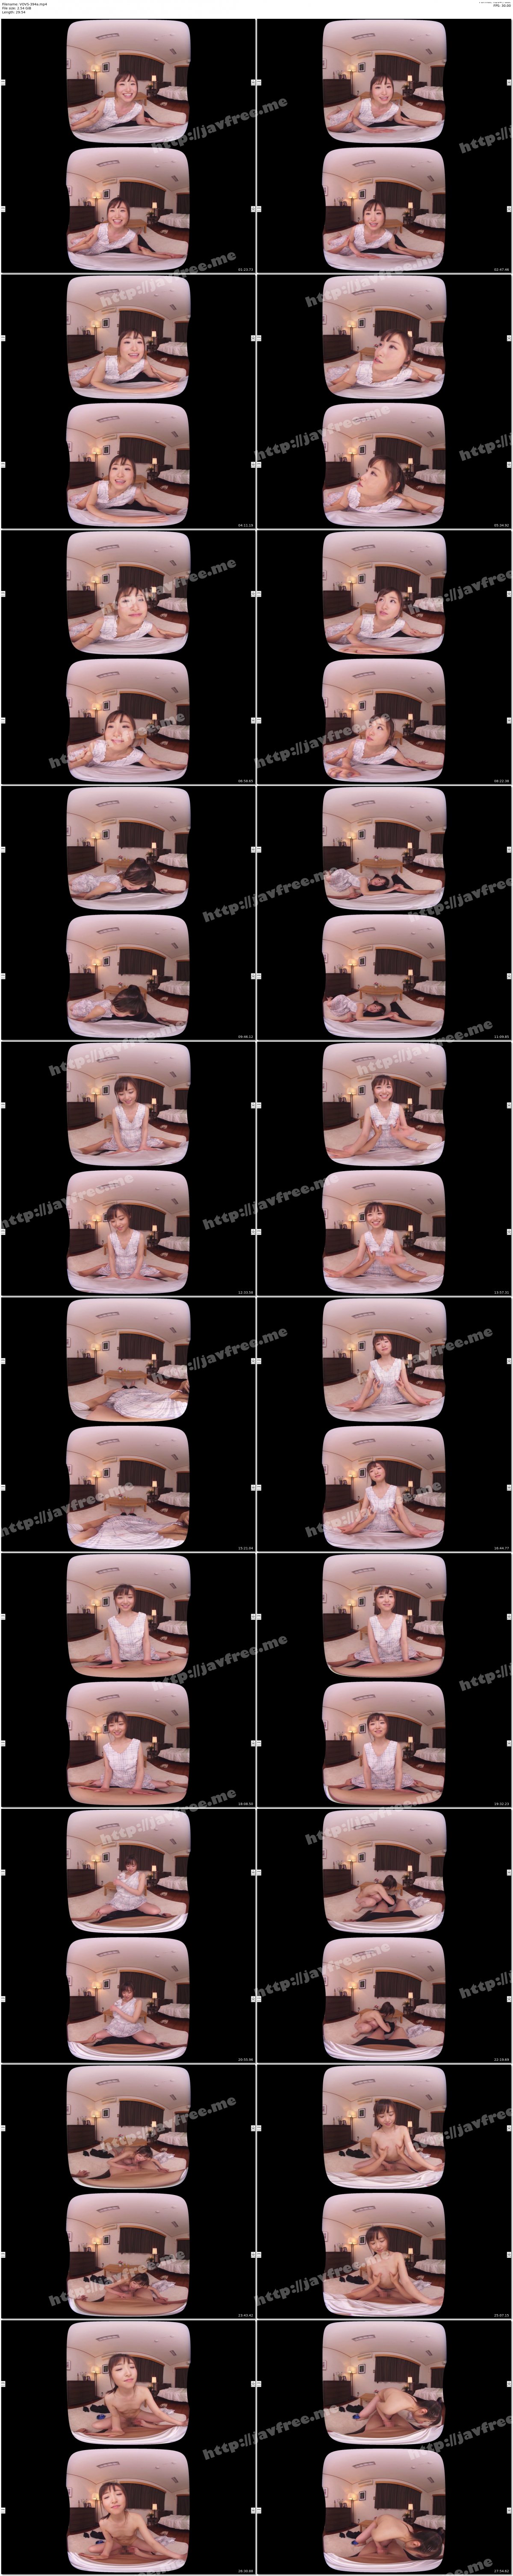 [HD][MSTG-008] まだ妻を抱かない 嫁が僕の寝てる横で初めてオナニーをした 美原すみれ - image VOVS-394a on //mebleva.ru